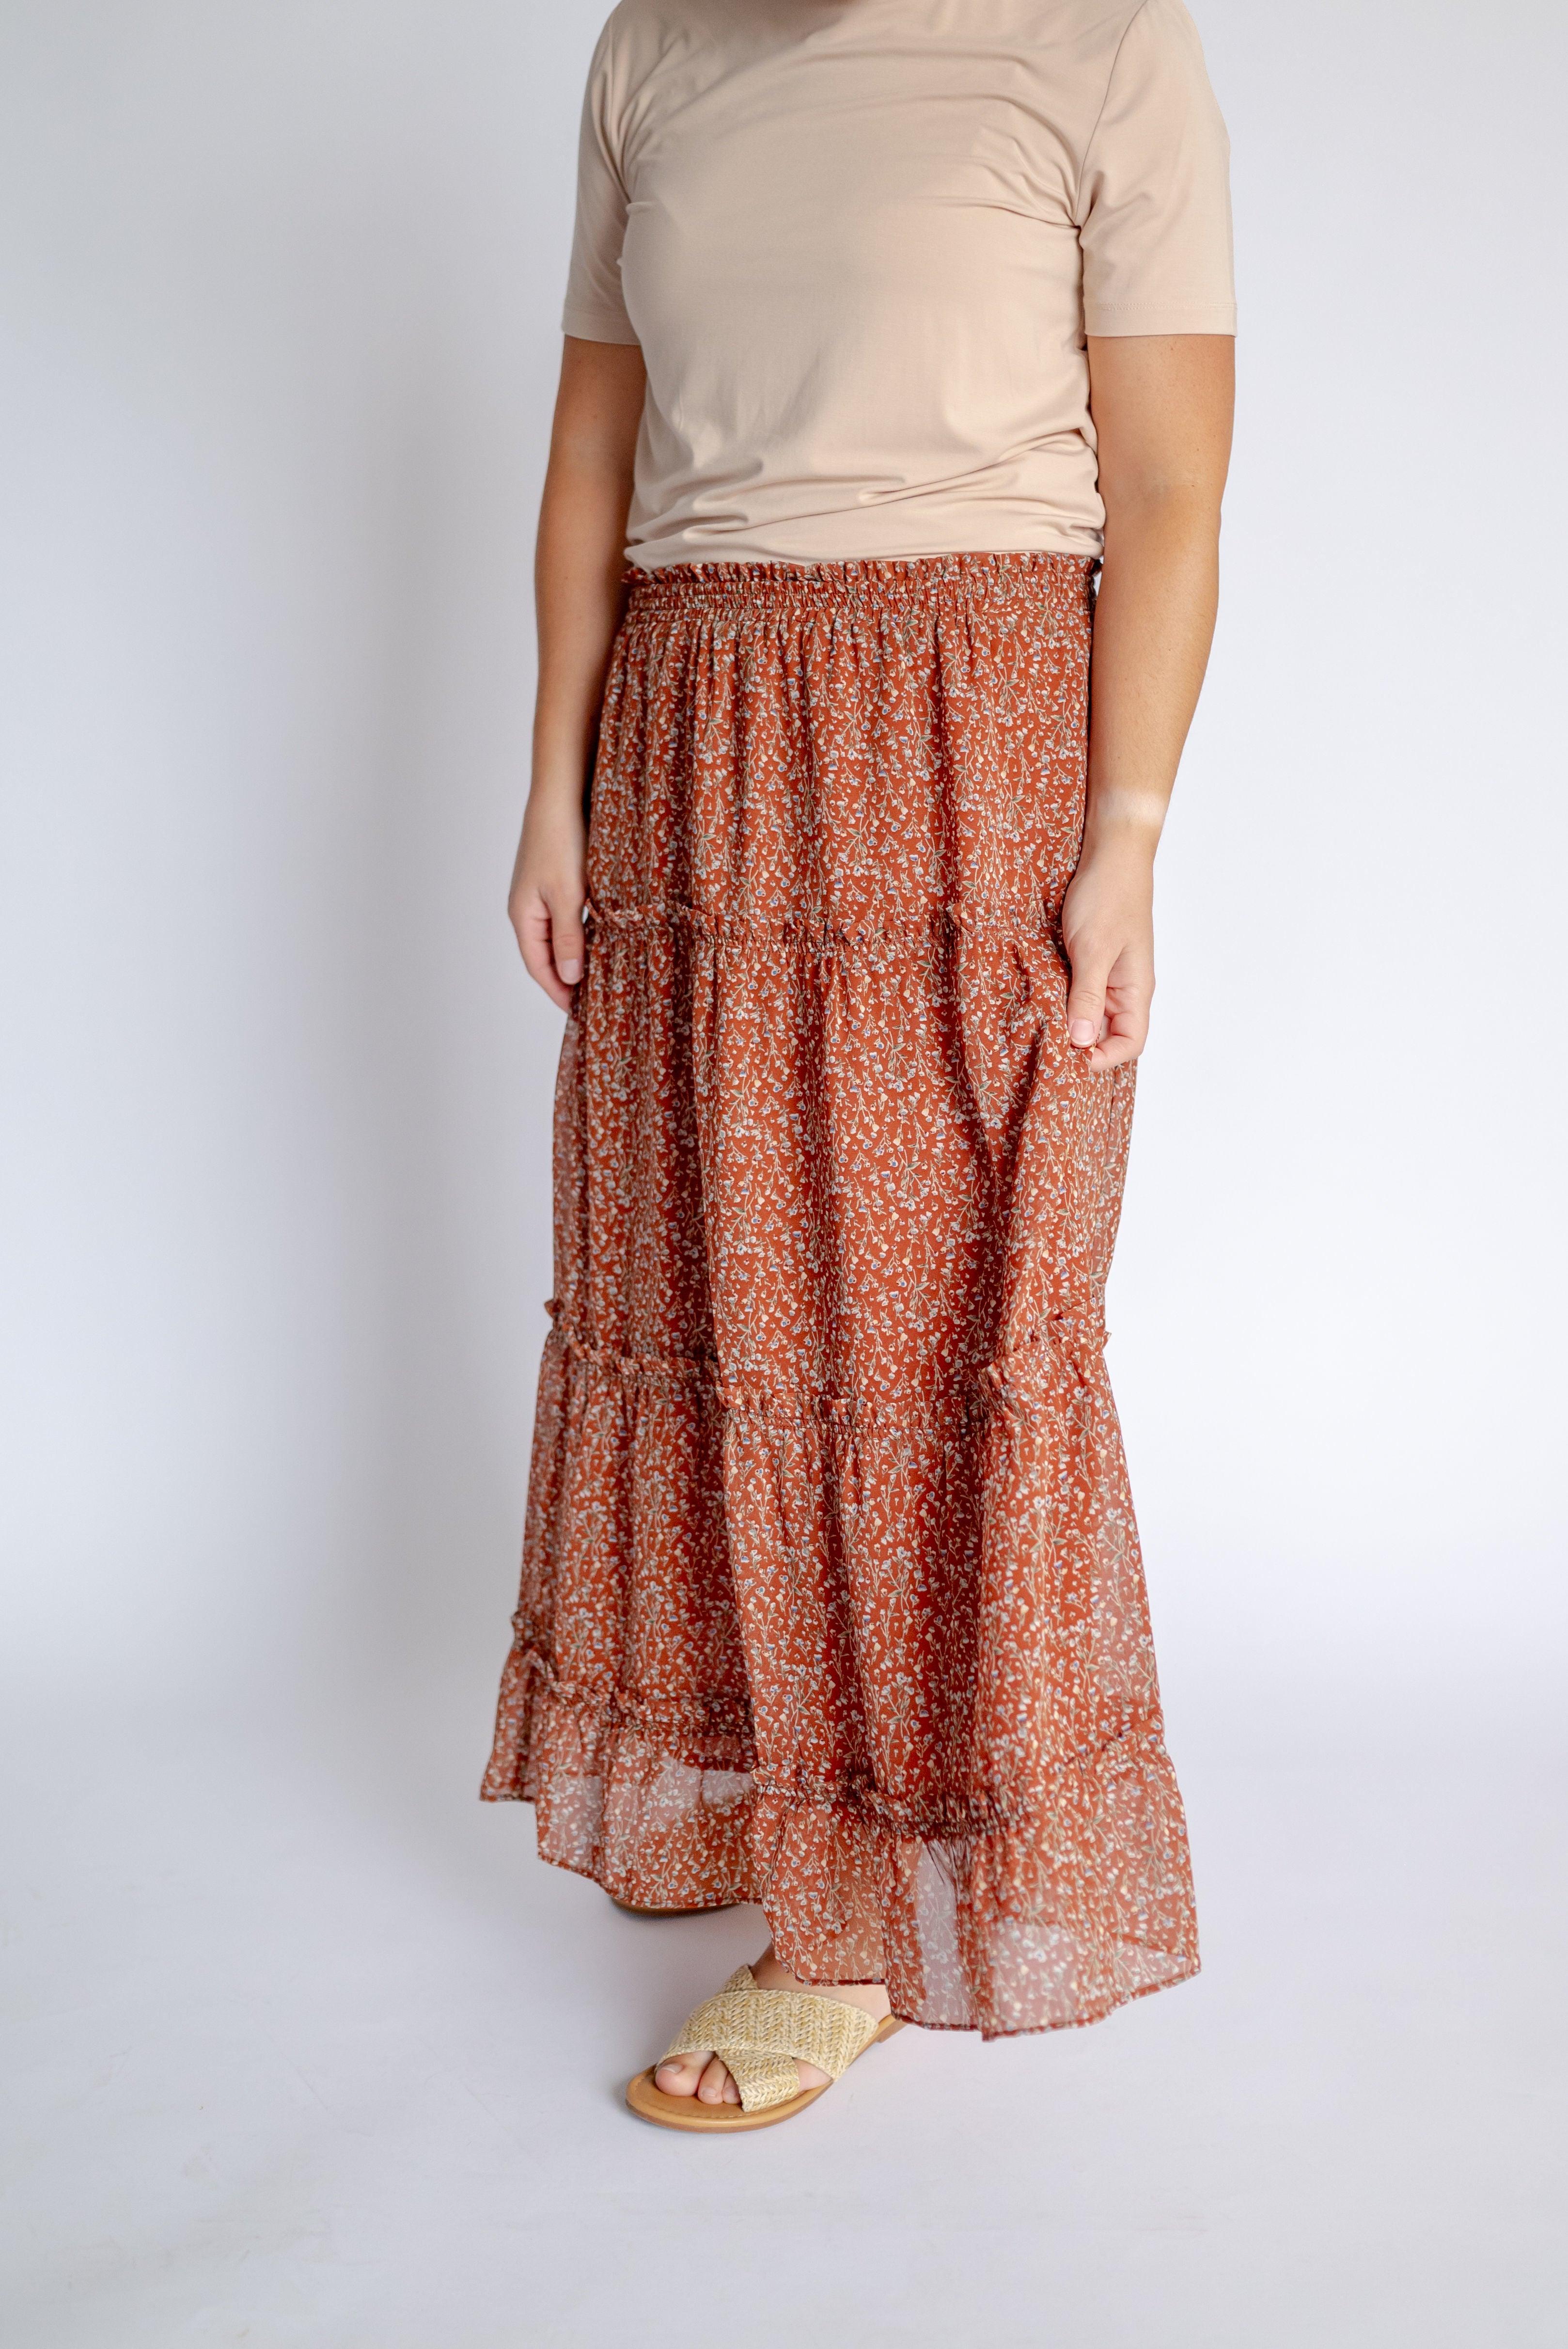 Atlee Ditsy Floral Skirt in Rust - Atlee Ditsy Floral Skirt in Rust - undefined - Salt and Honey